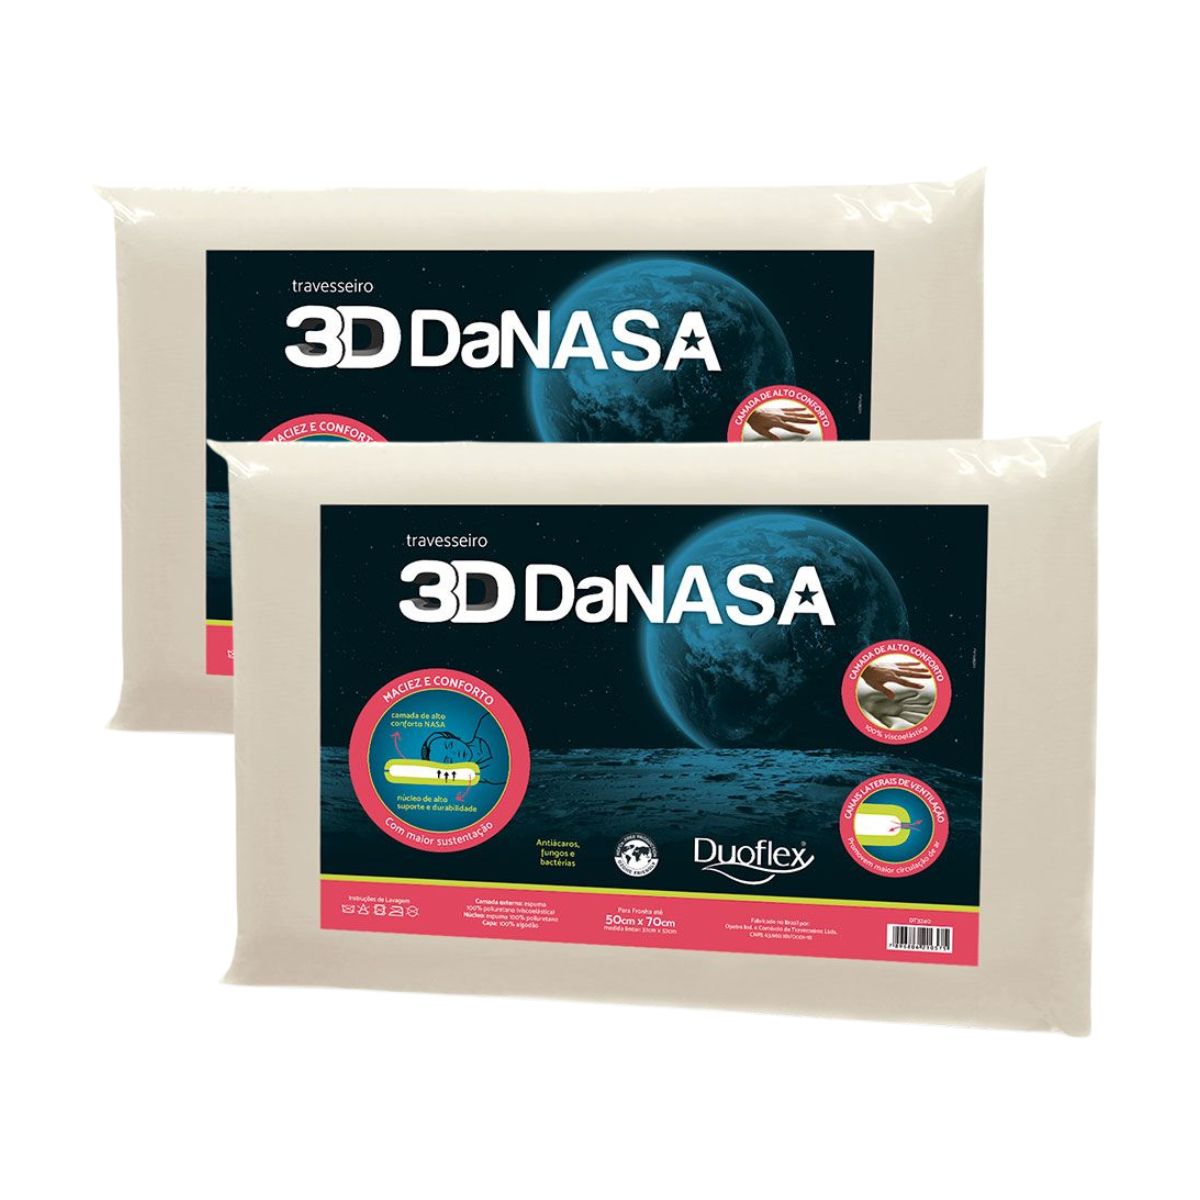 Travesseiro 3D Danasa Kit 2 unidades Duoflex